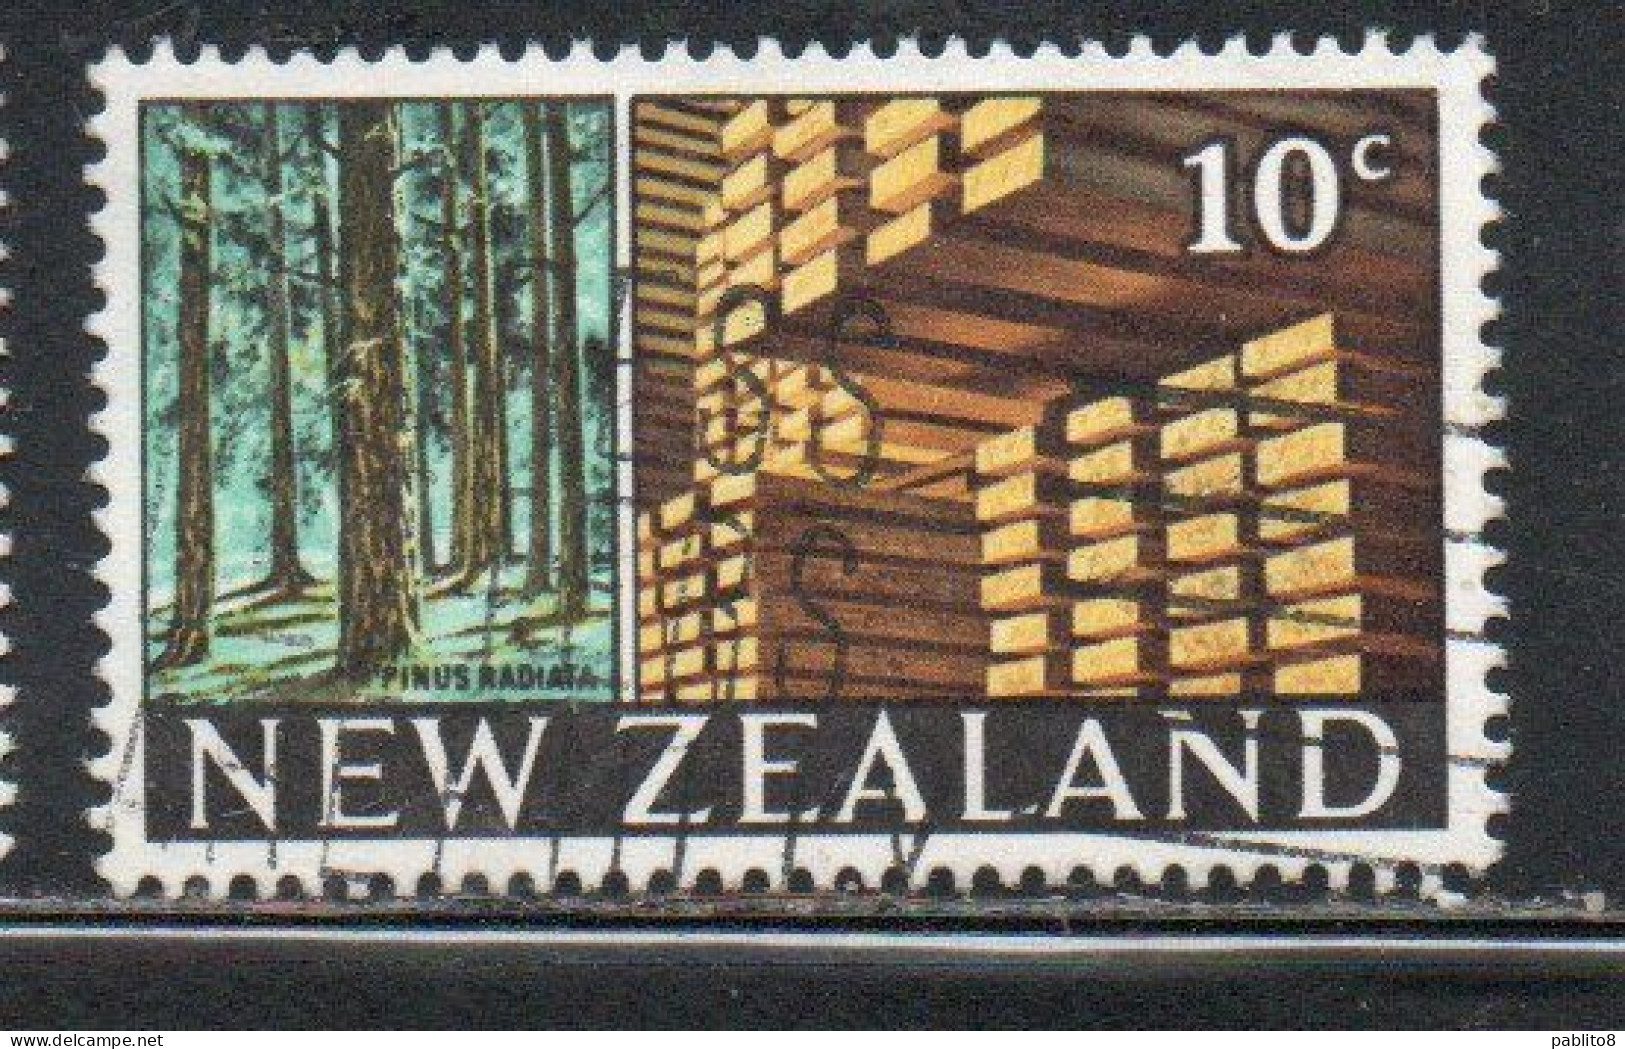 NEW ZEALAND NUOVA ZELANDA 1968 1969 RADATA PINES AND STACKED LUMBER 10c USED USATO OBLITERE' - Oblitérés